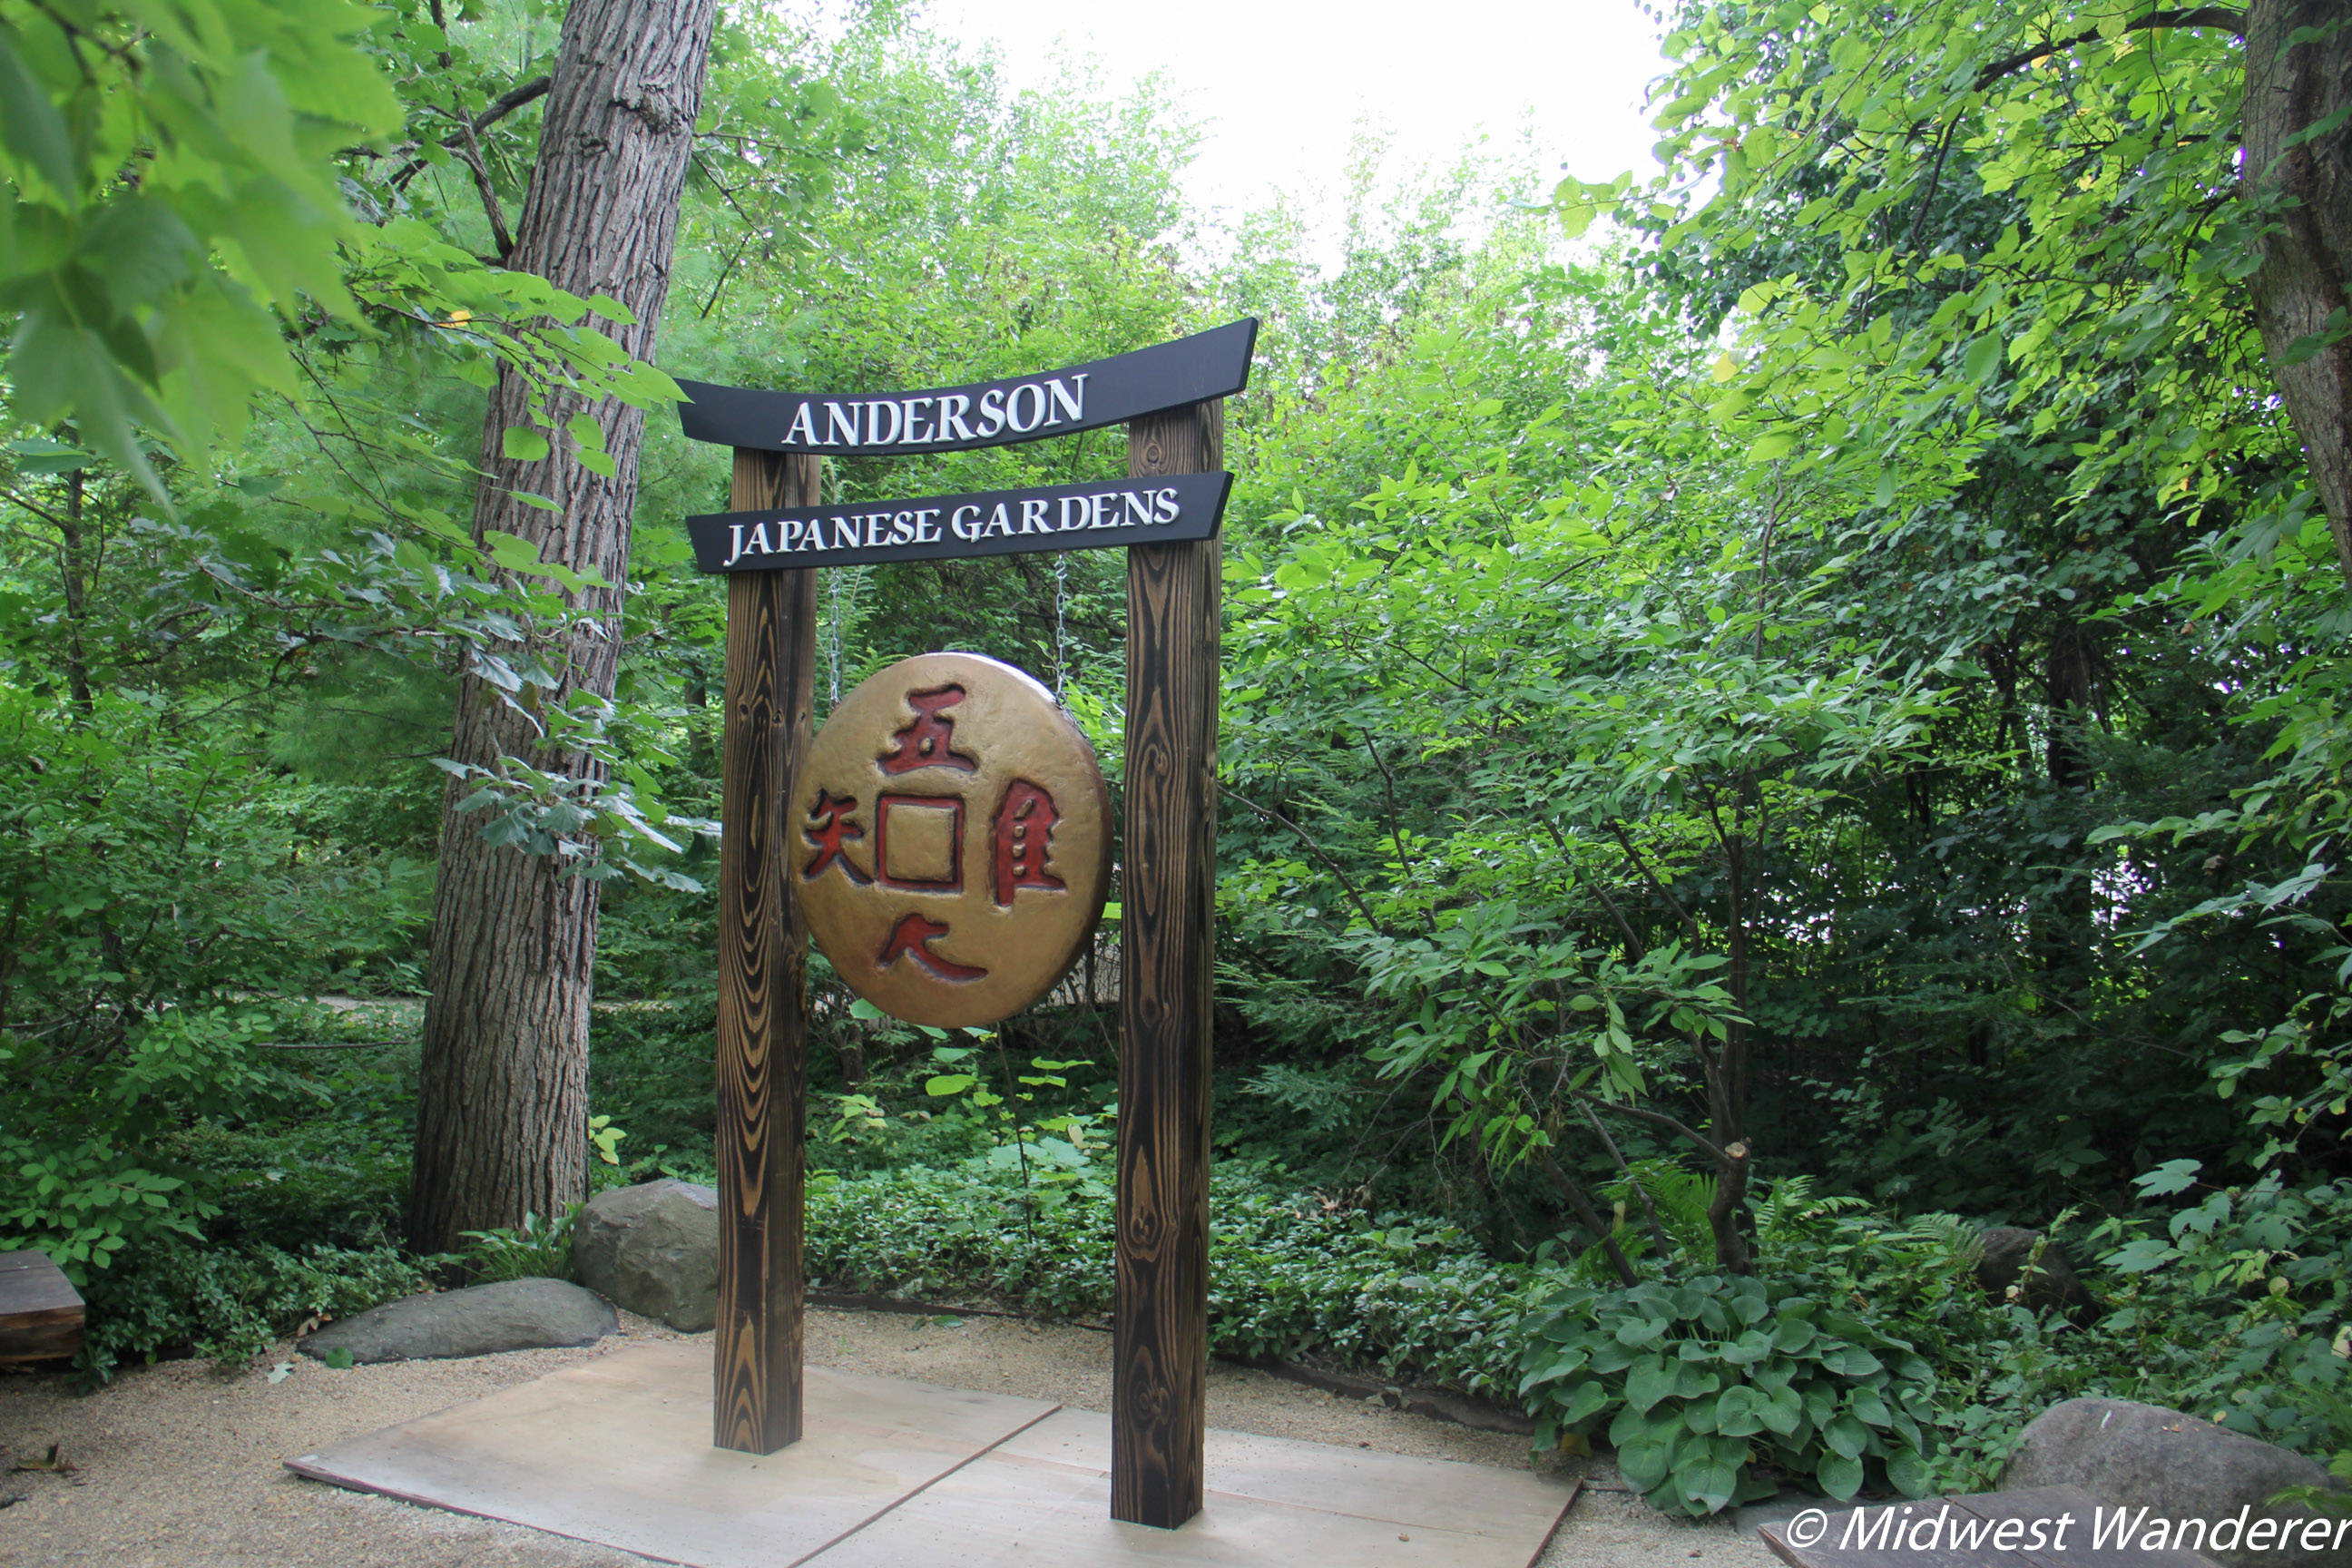 Anderson Japanese Gardens - Entrance